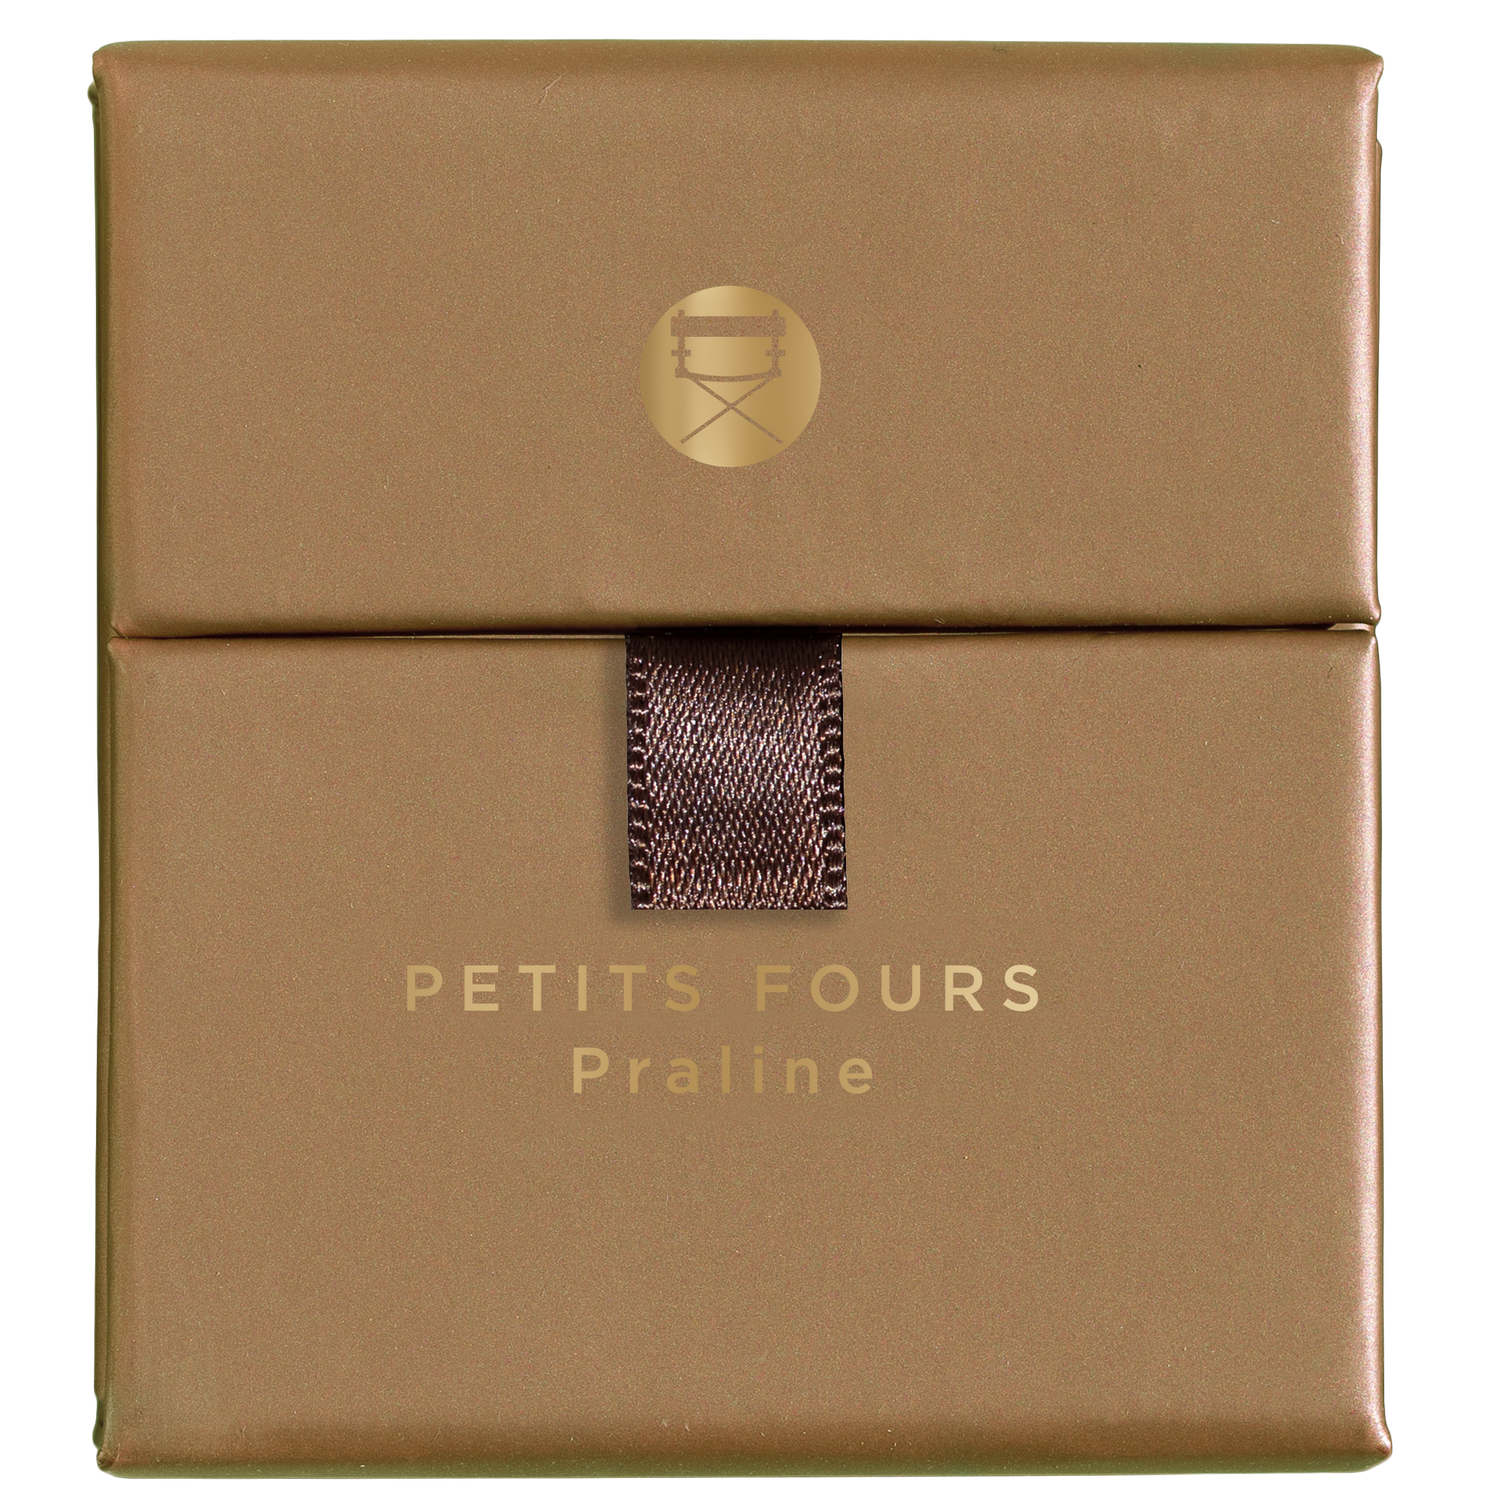 Viseart Paris Petits Fours Praline Eyeshadow Palette Case